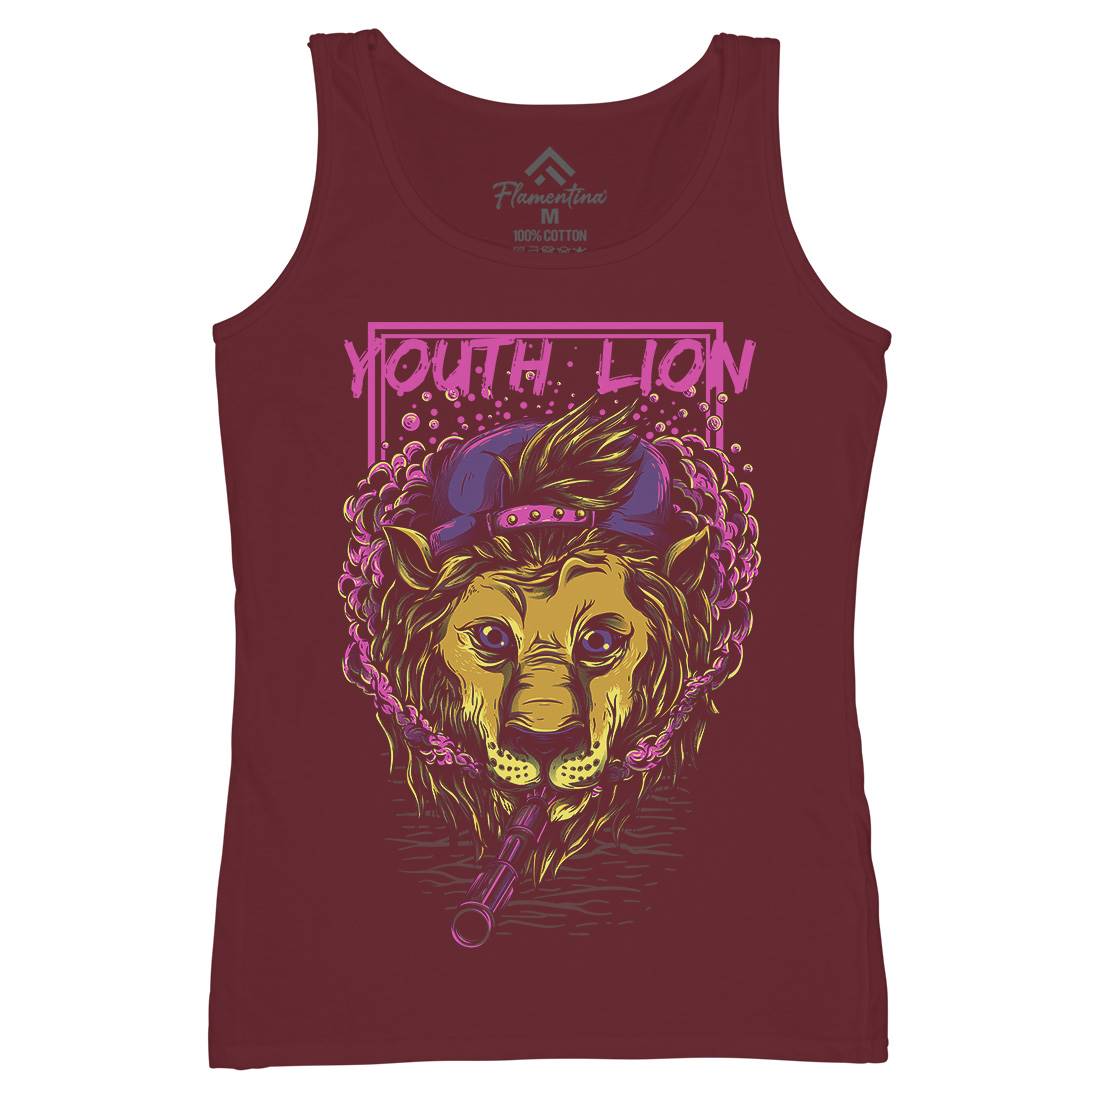 Youth Lion Womens Organic Tank Top Vest Animals D893